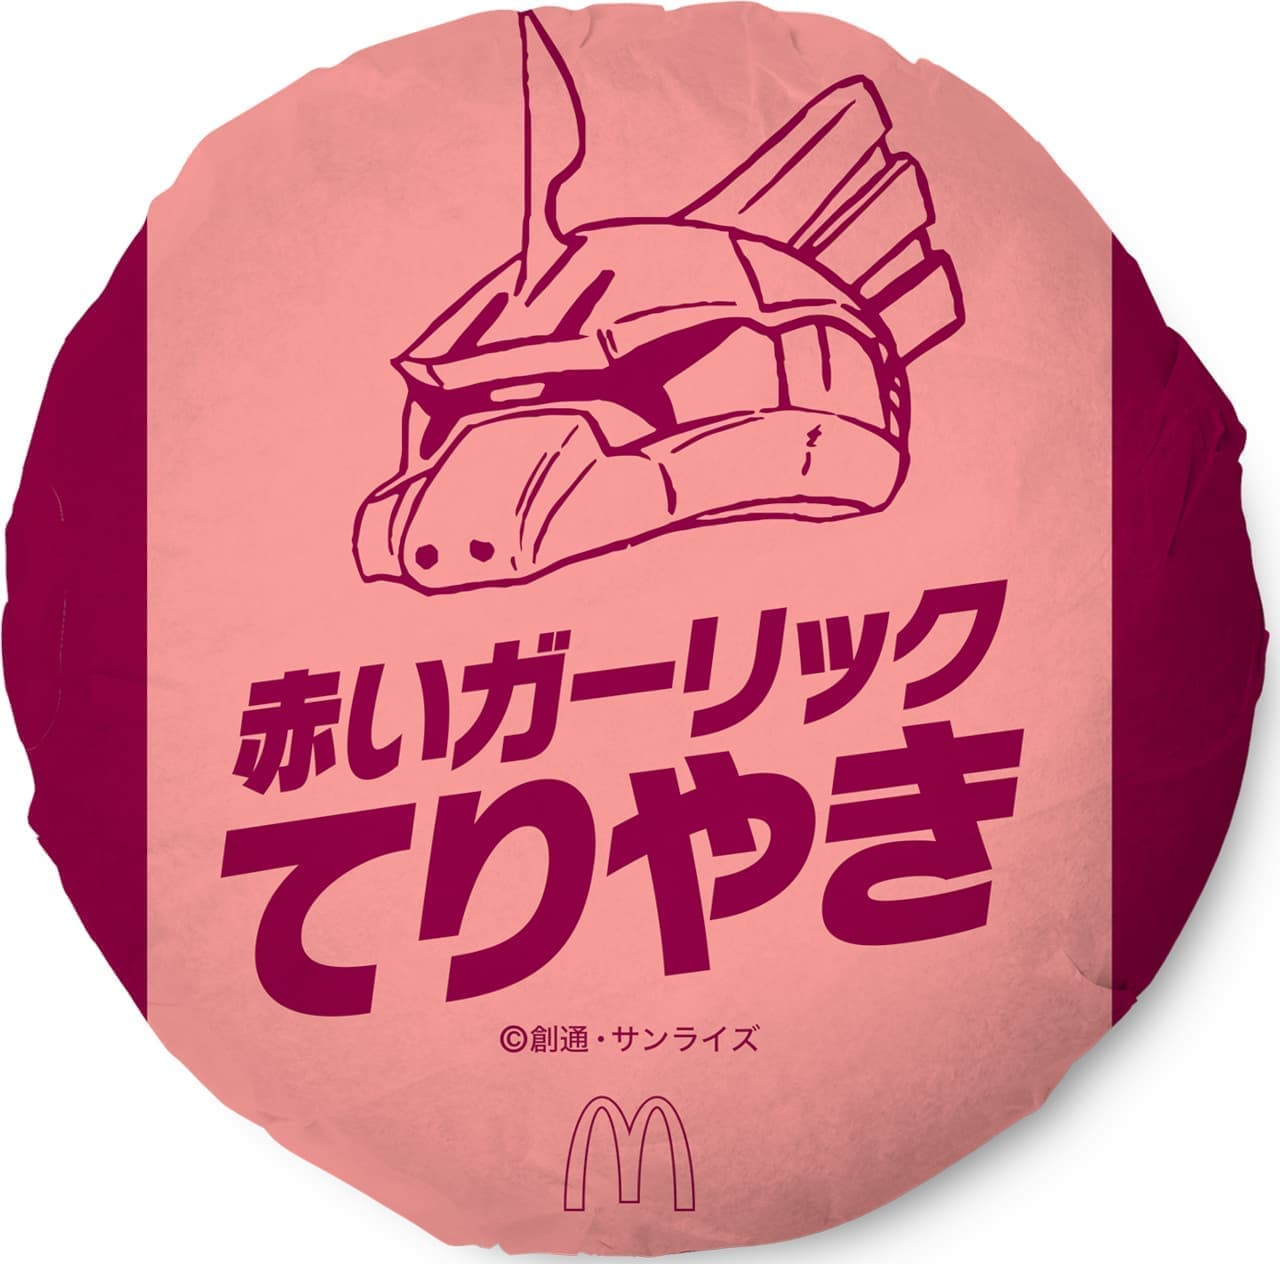 "McDonald's for Char" collaboration menu